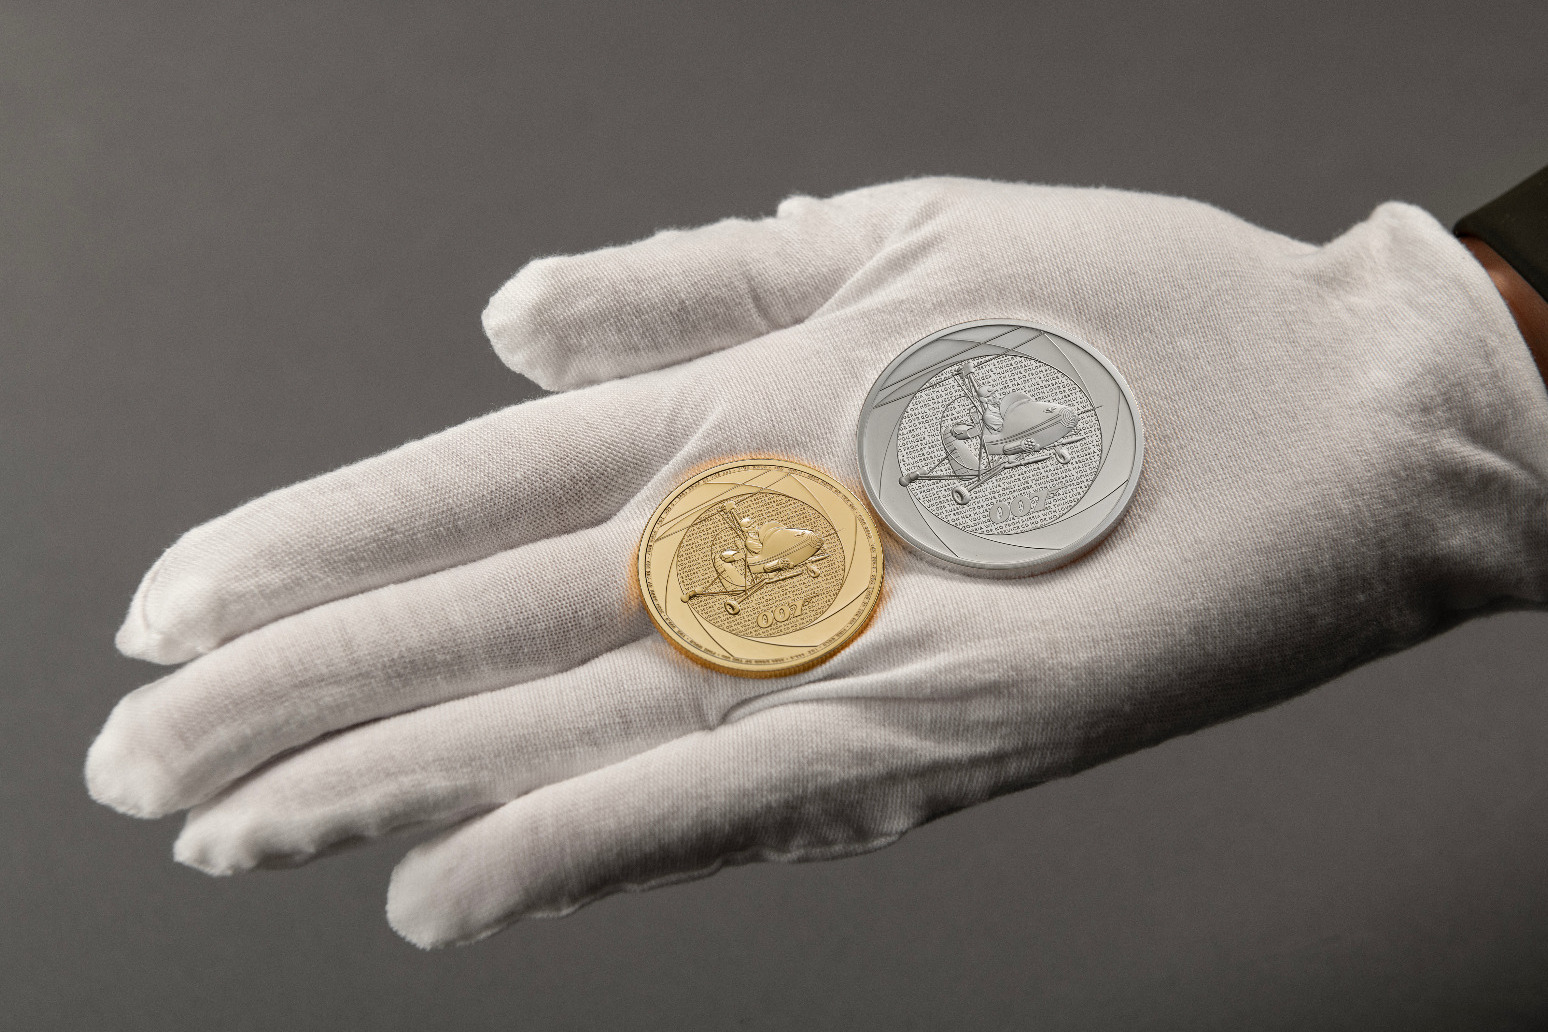 James Bond celebrated in new Royal Mint coin range 